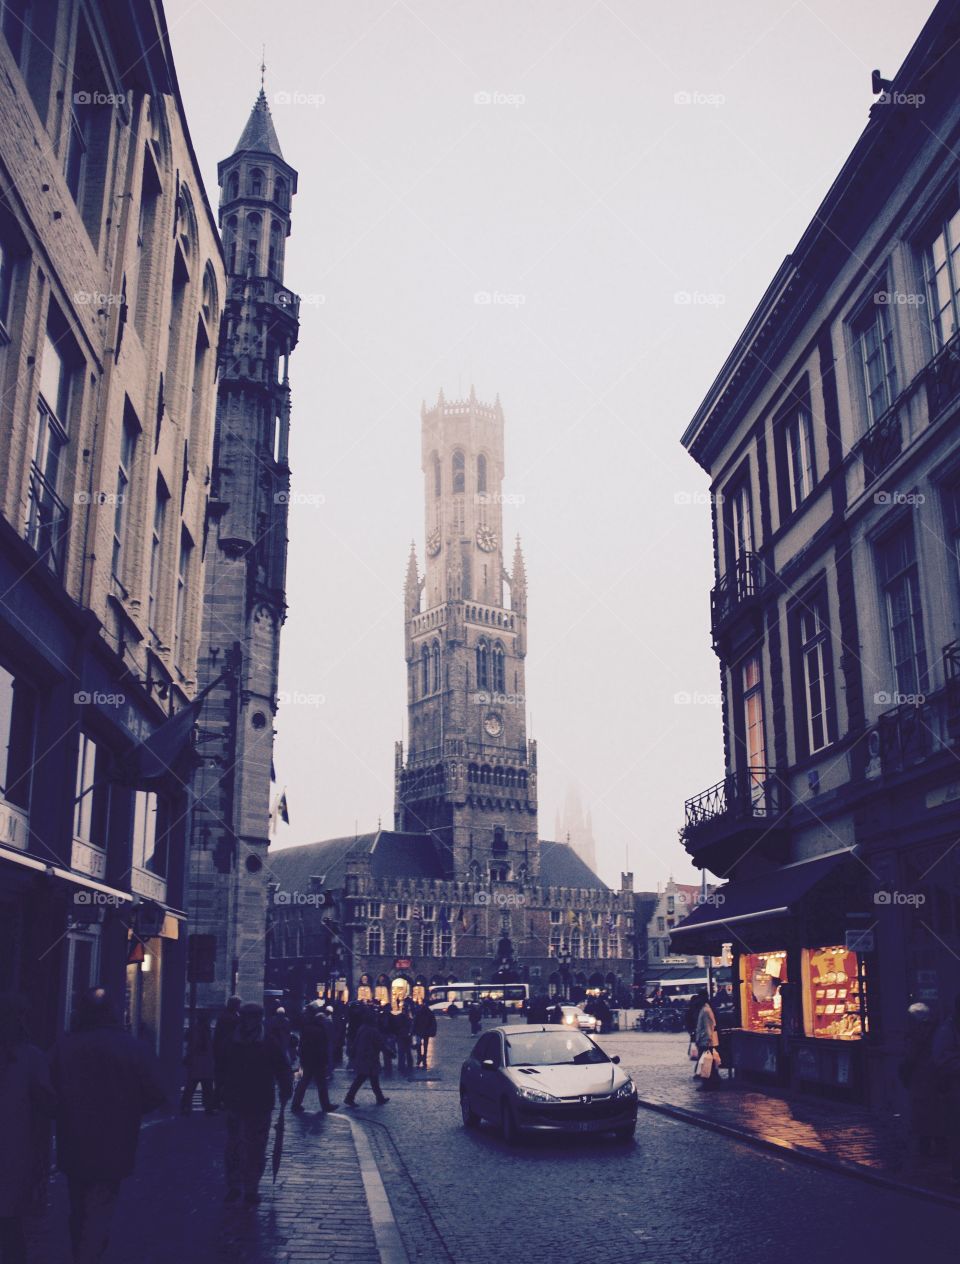 Tower. Brugge. 